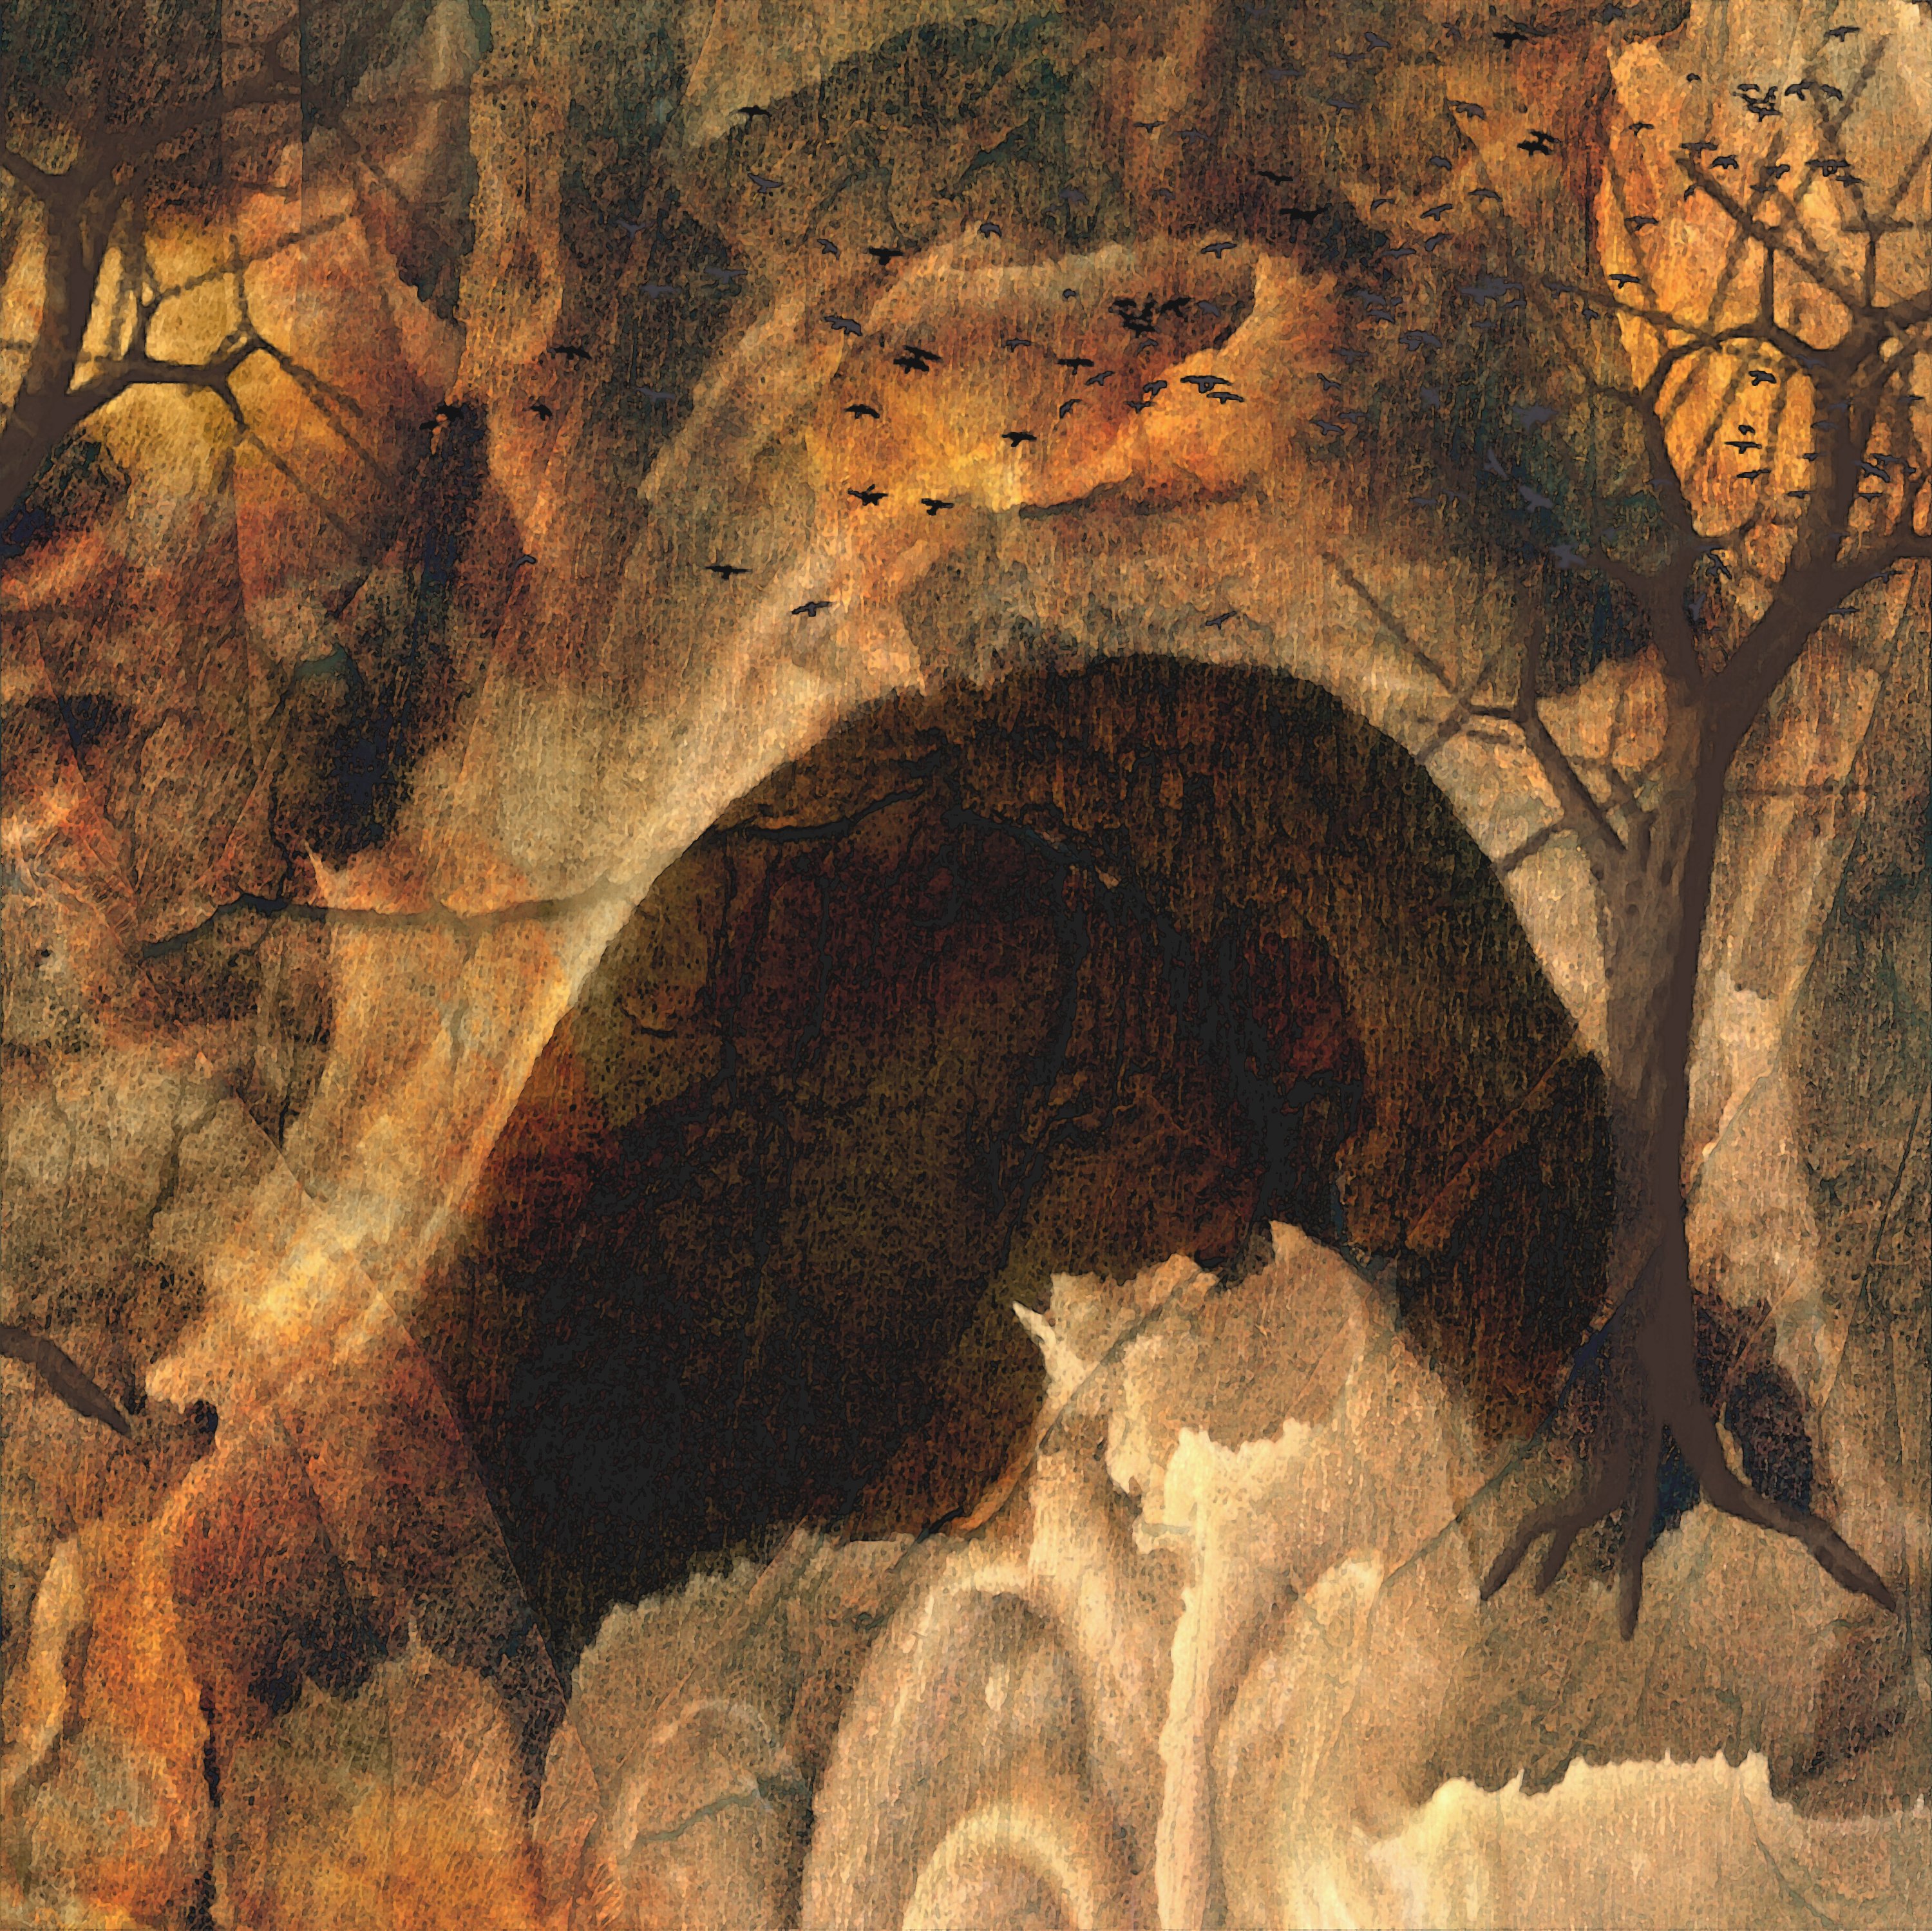 paintings, caves, bats - desktop wallpaper